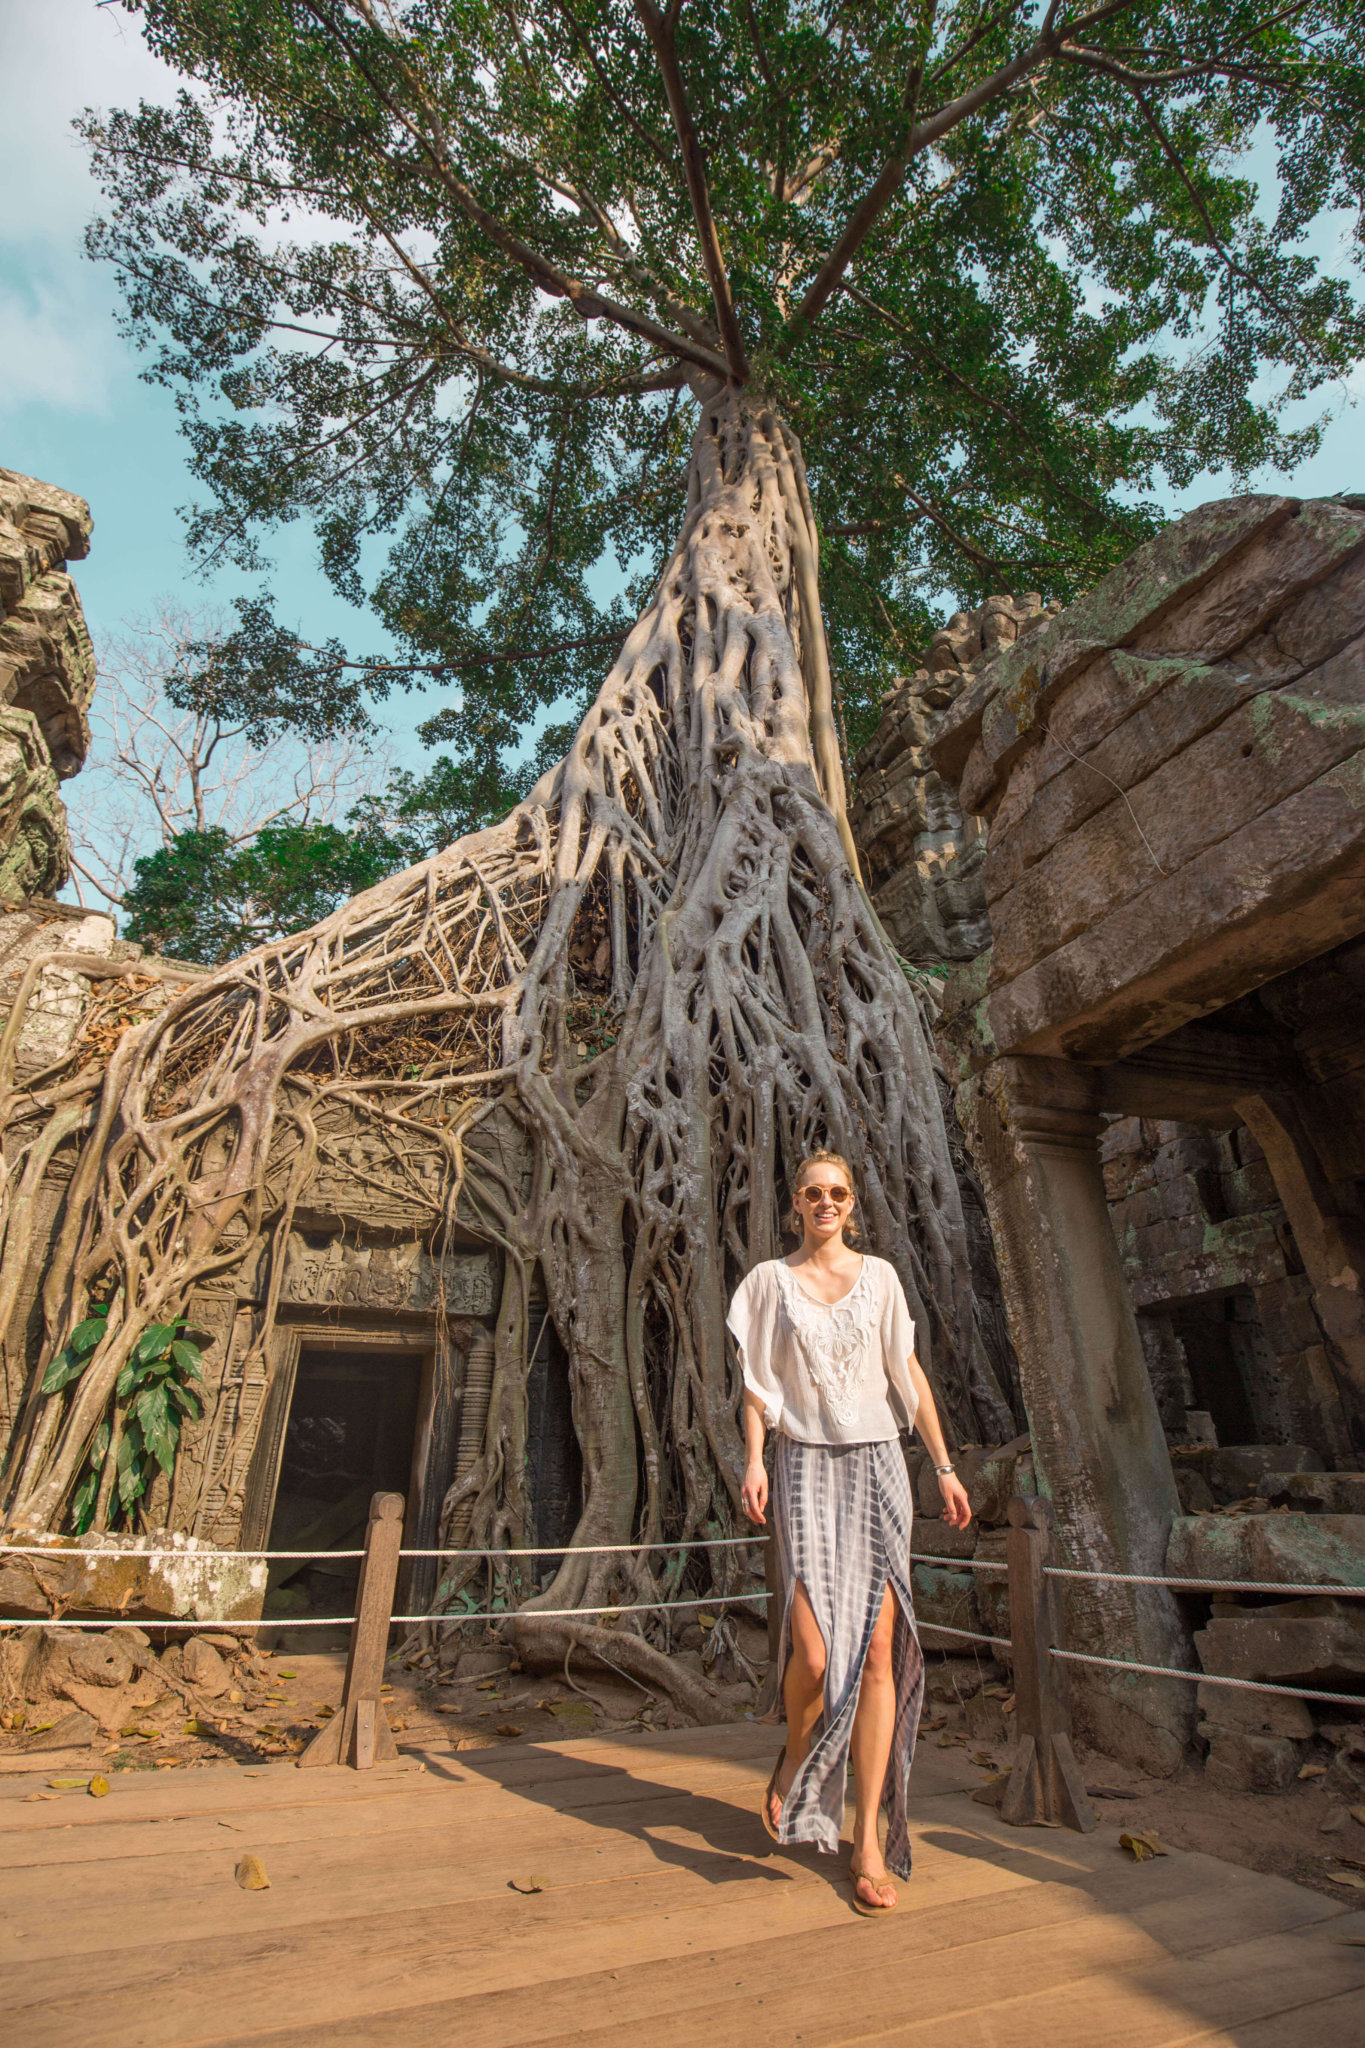 Siem Reap, Angkor Wat, What to do in Siem Reap, Siem Reap Guide, Cambodia, Best Photos of Angkor Wat, Angkor Wat in a day, Wanderluluu, Ta Prohm, Tree doorway Angkor Wat, Tree temple Angkor Wat, Tomb Raider Temple Angkor Wat